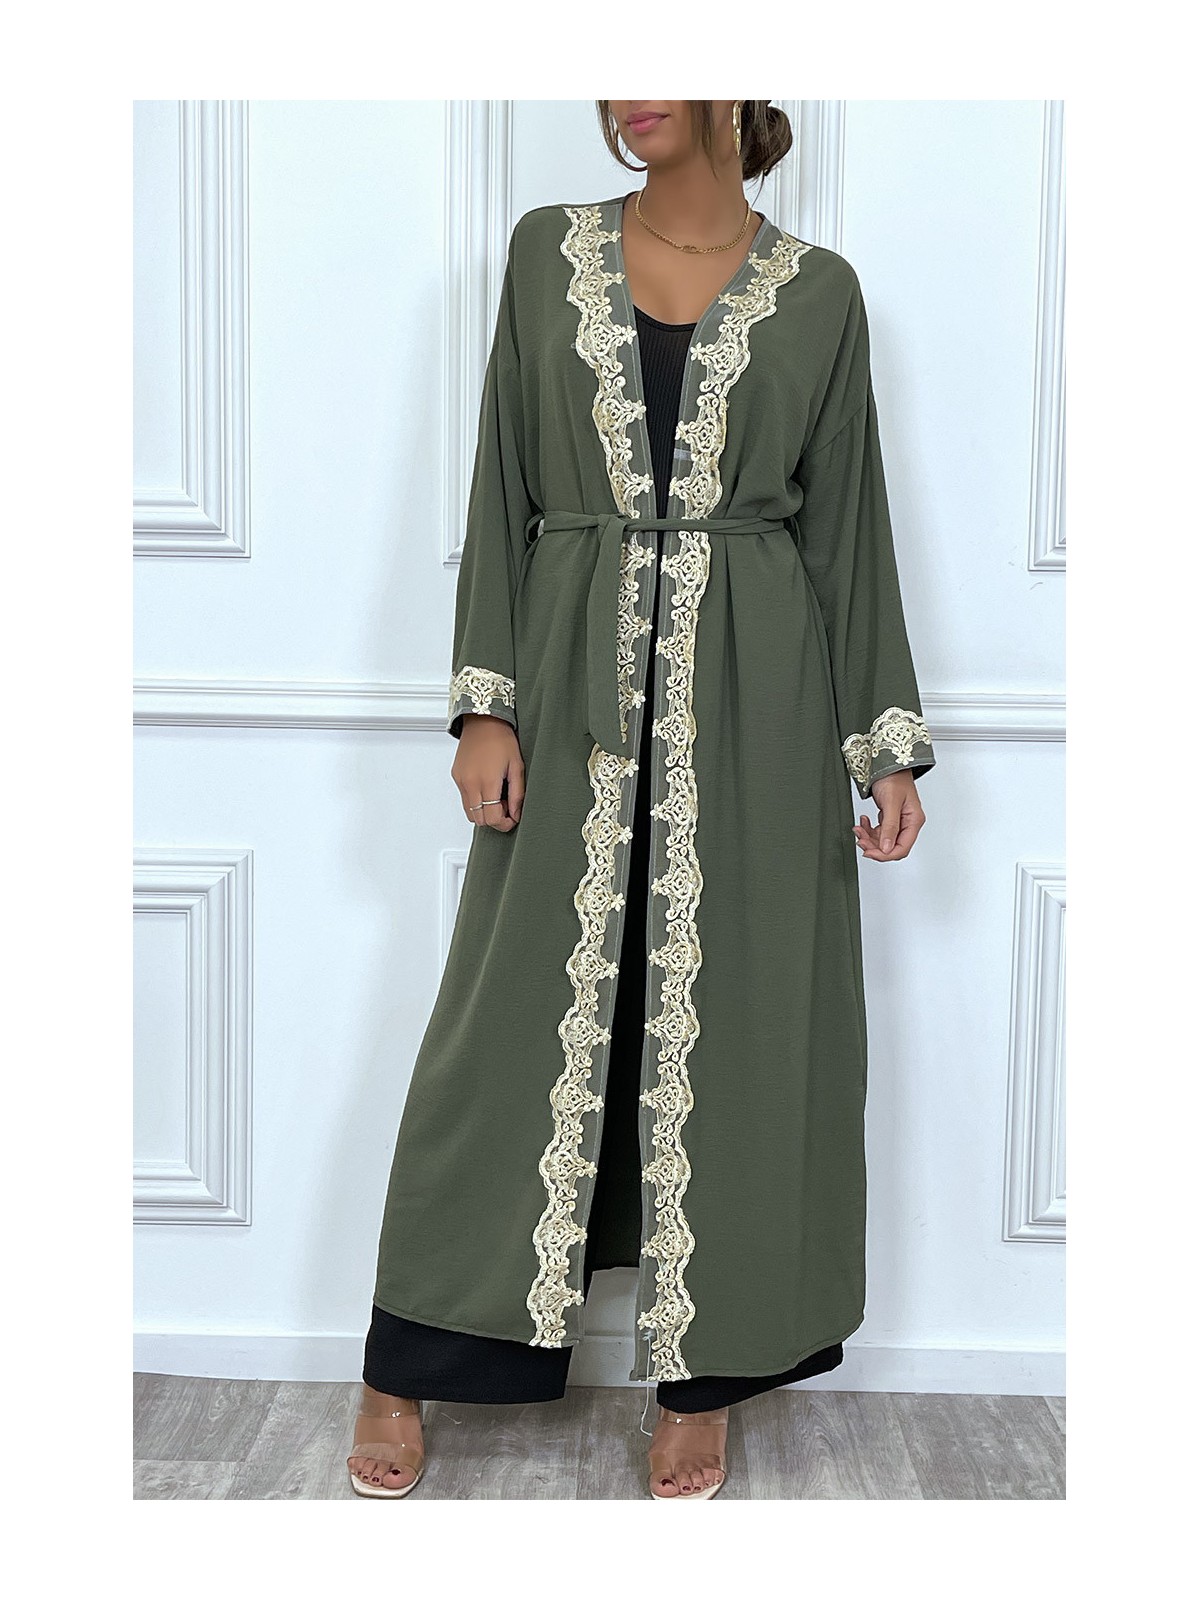 KiLKno long ceinturé style abaya kaki avec broderie doré - 5